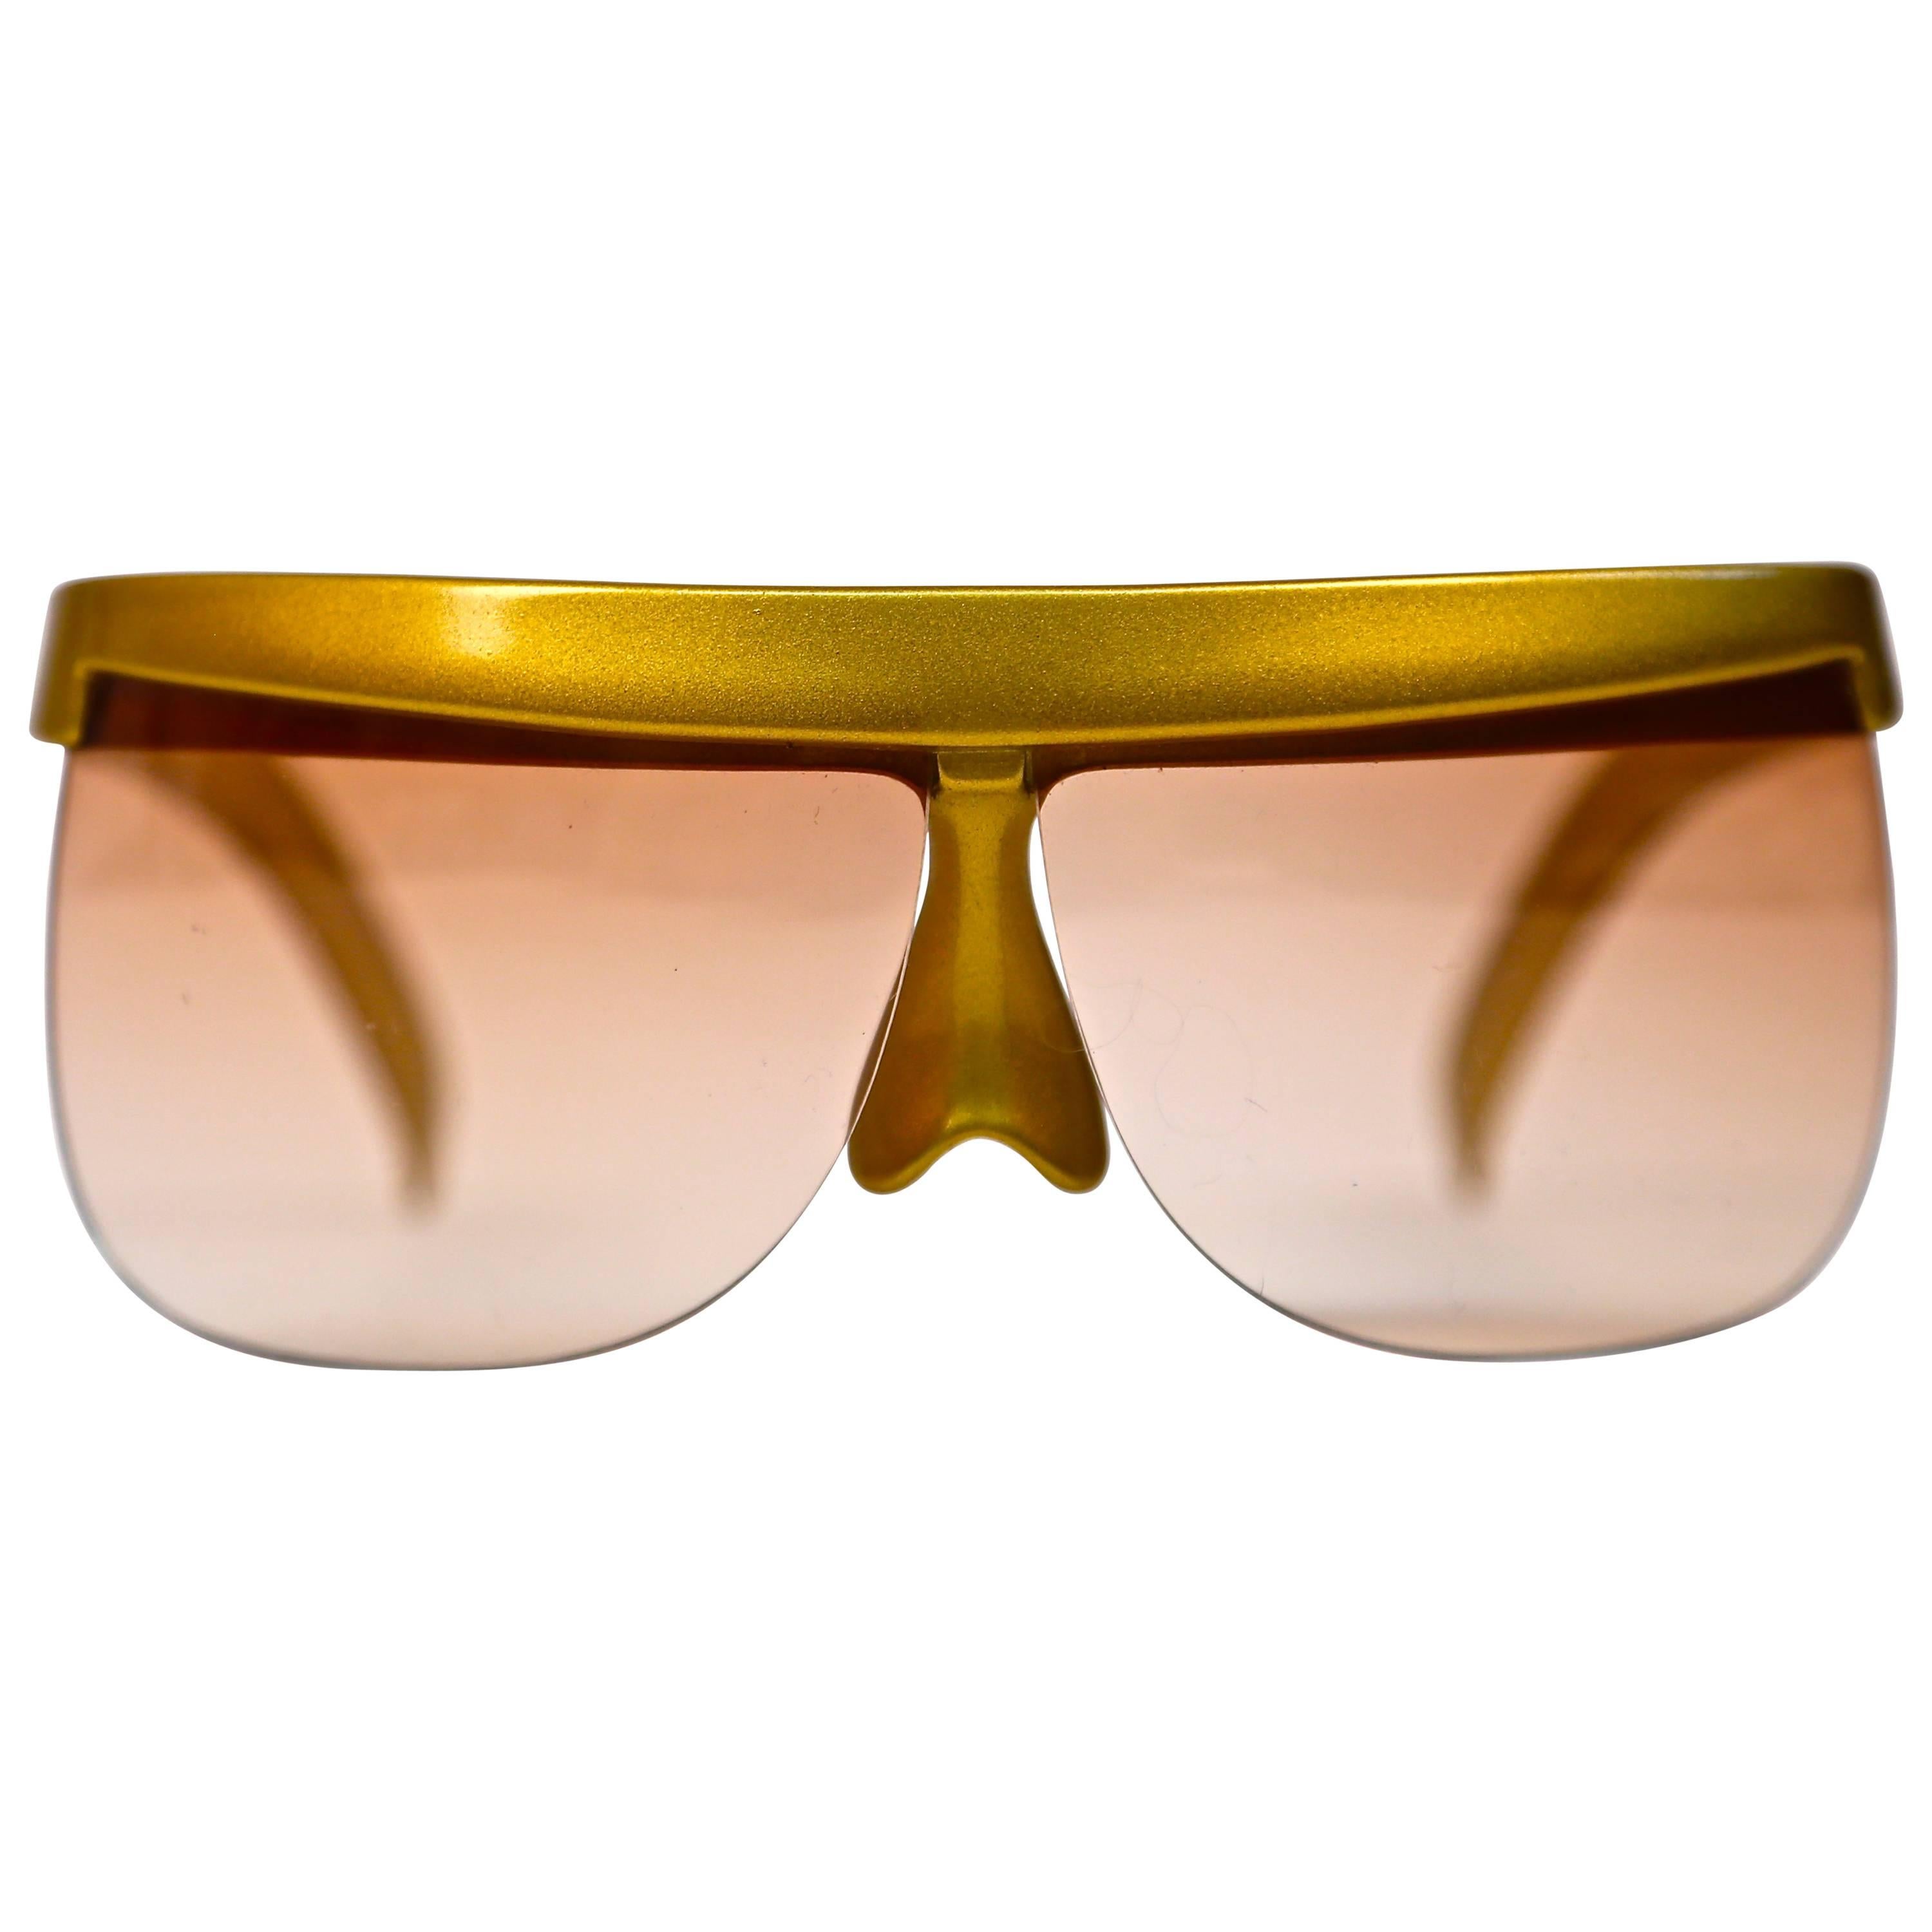 1970's COURREGES gold plastic sunglasses